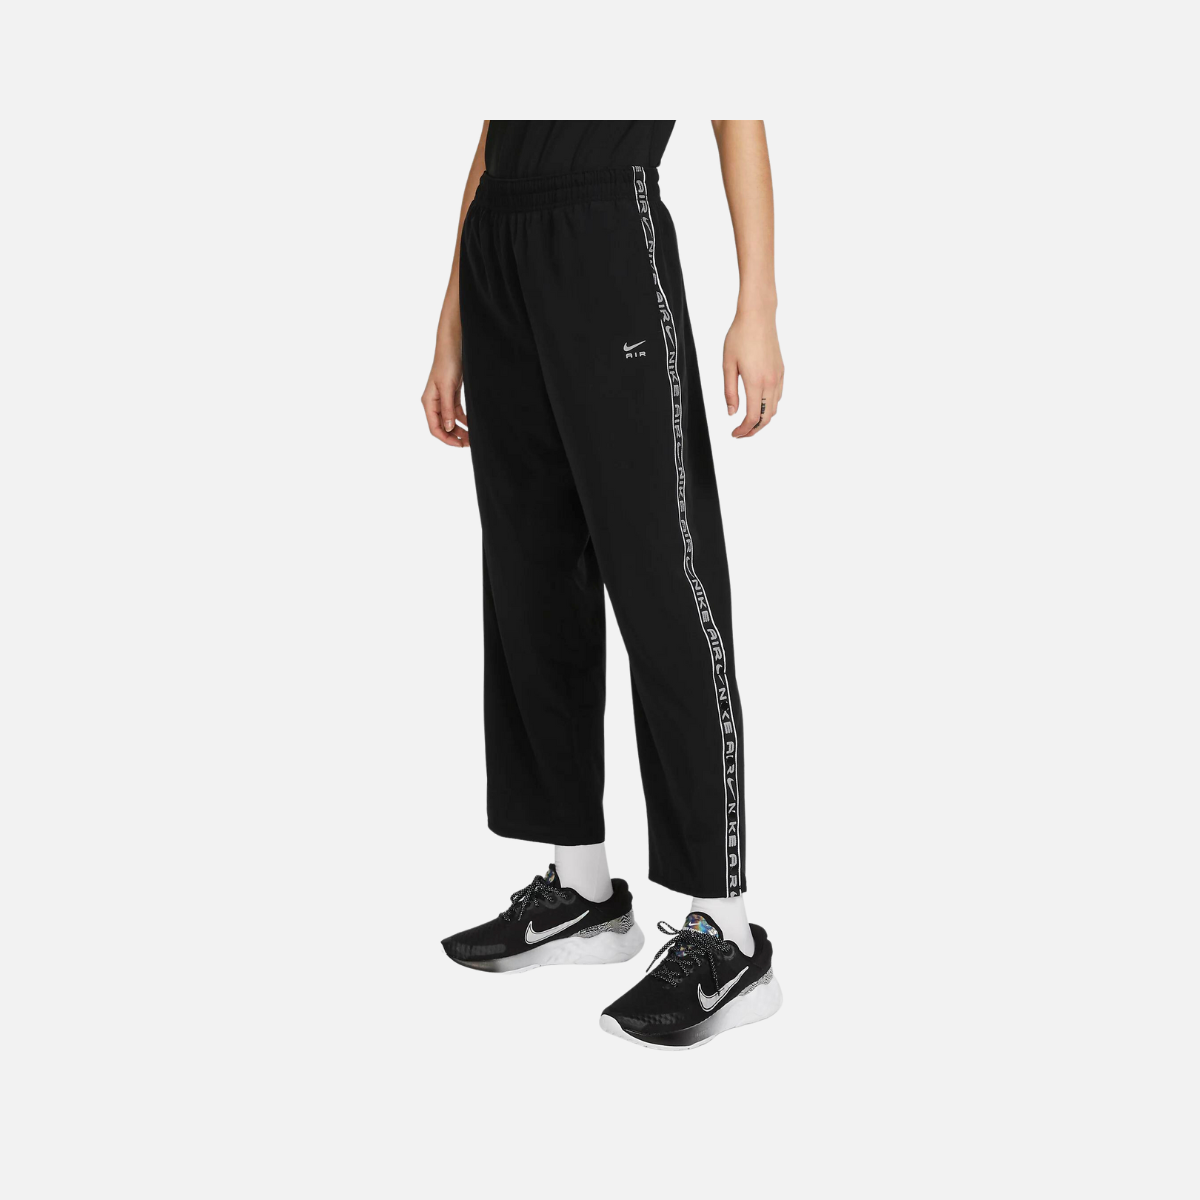 Nike Air Women's Mid-Rise Running Trousers -Black/Black/White